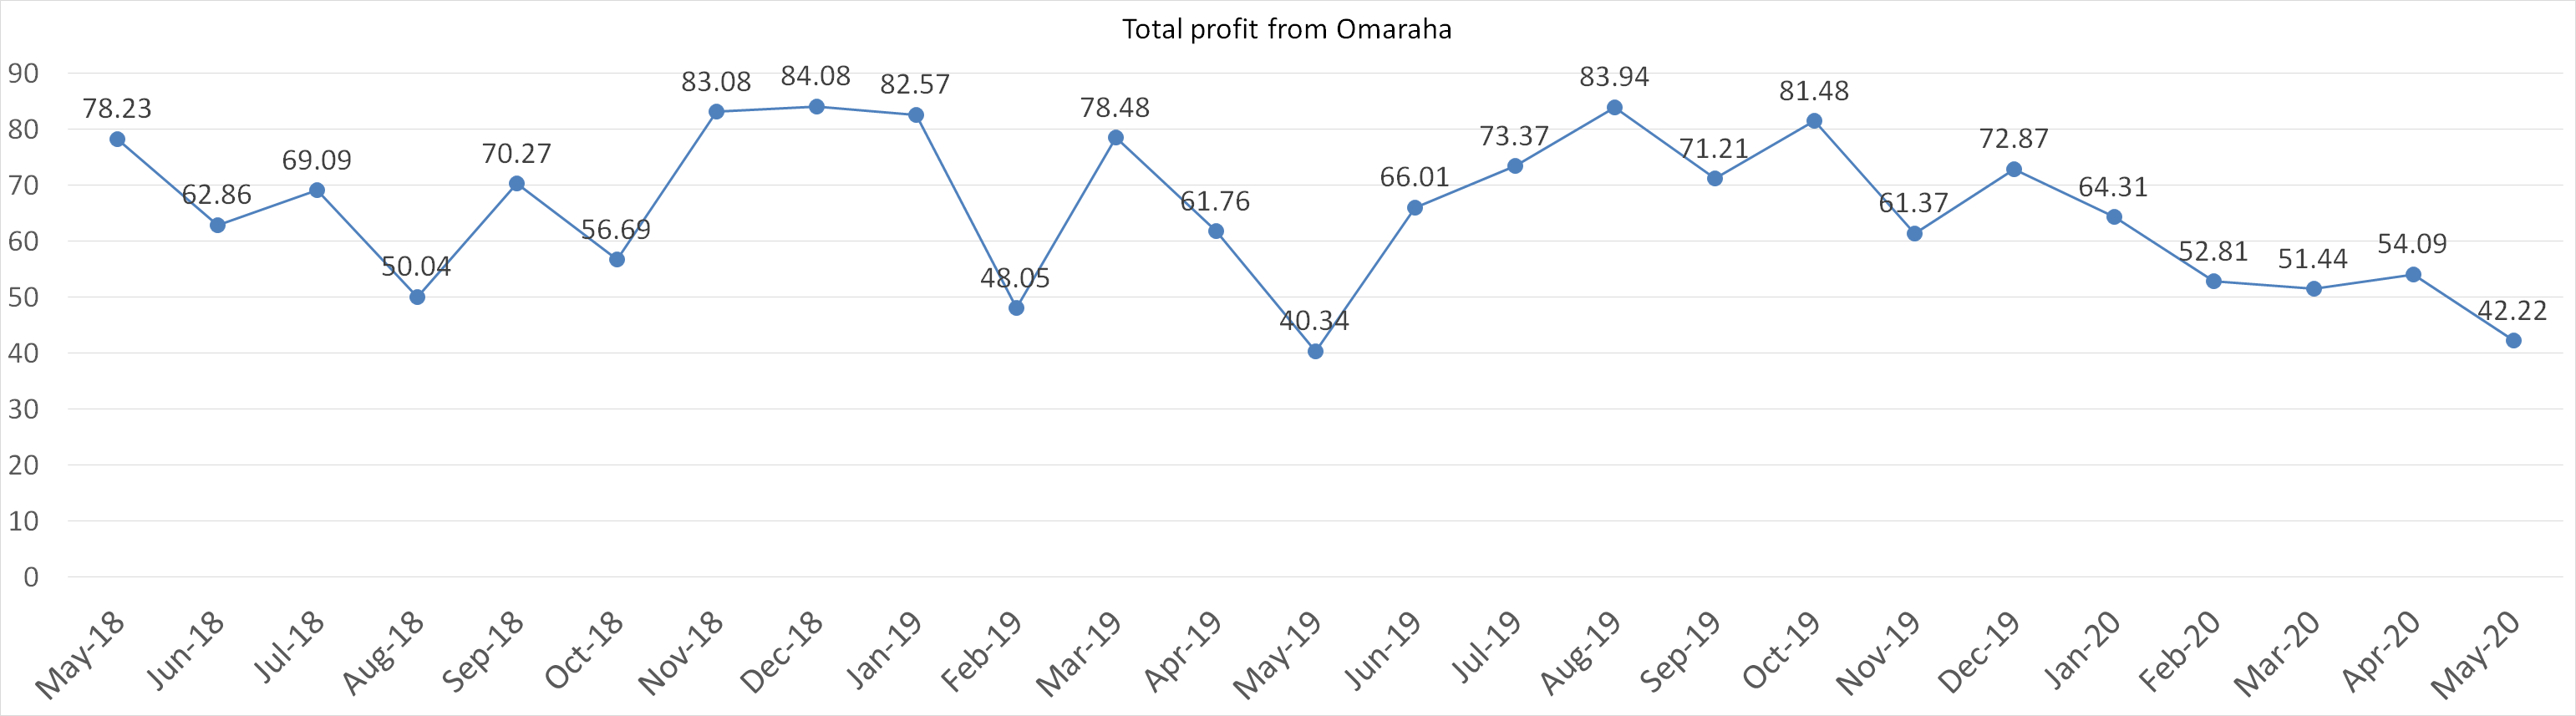 Total profit from Omaraha may 2002